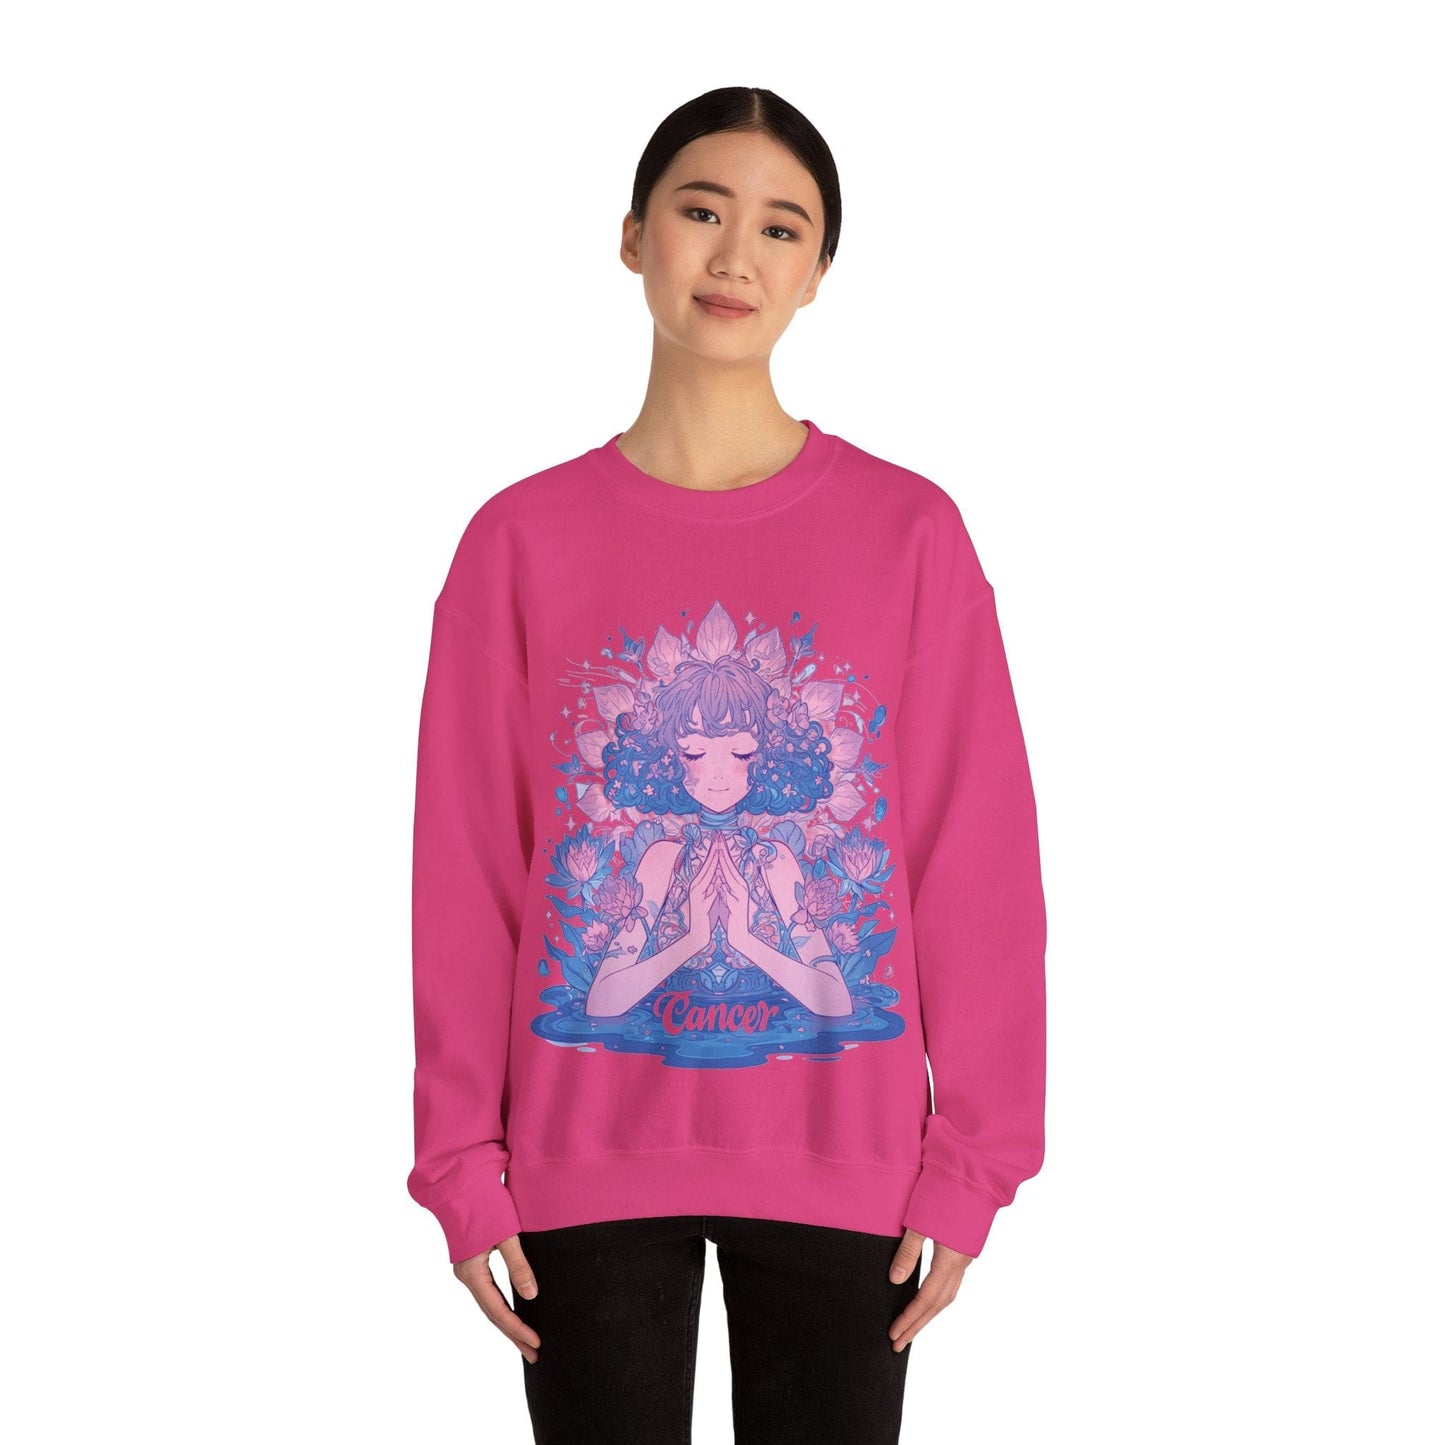 Sweatshirt Lunar Bloom Cancer Sweater: Embrace Tranquility